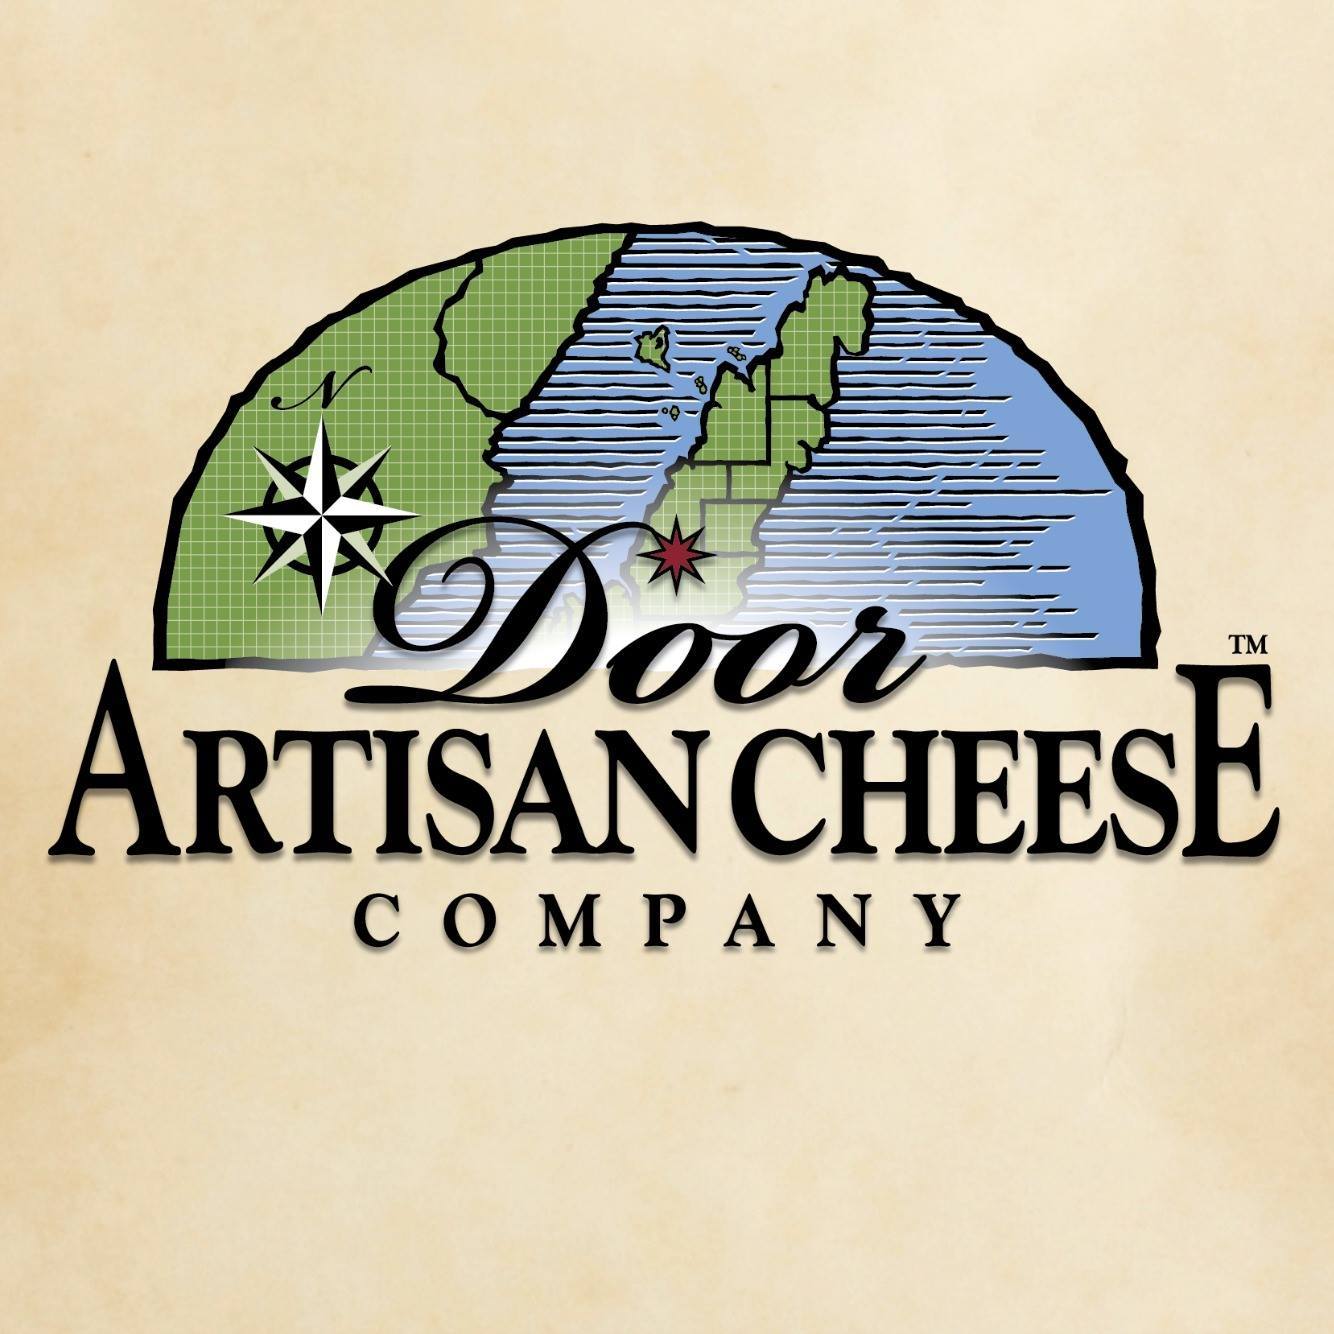 door artisan cheese company